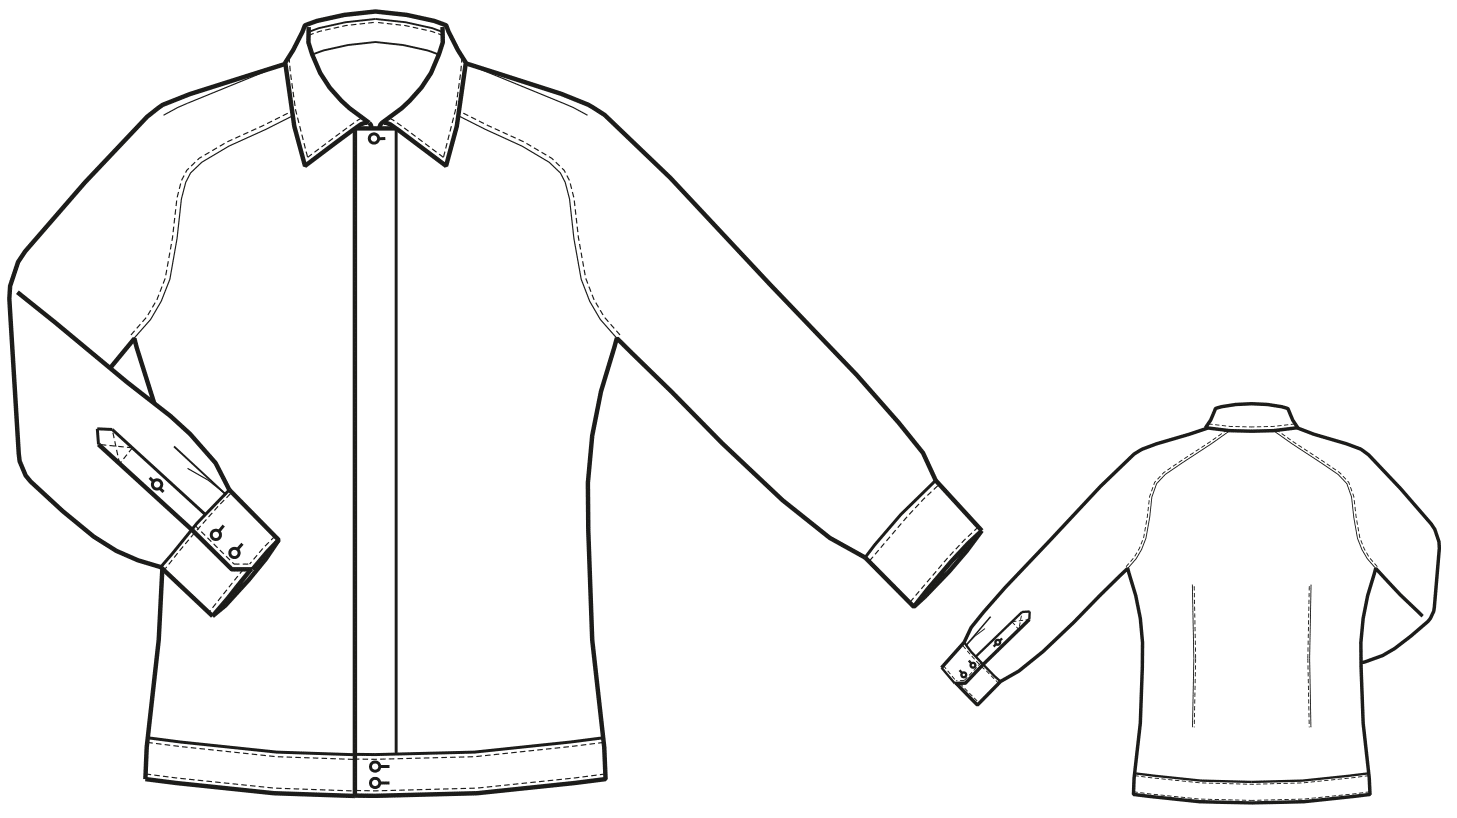 Pattern Construction for Shirts › M.Mueller & Sohn